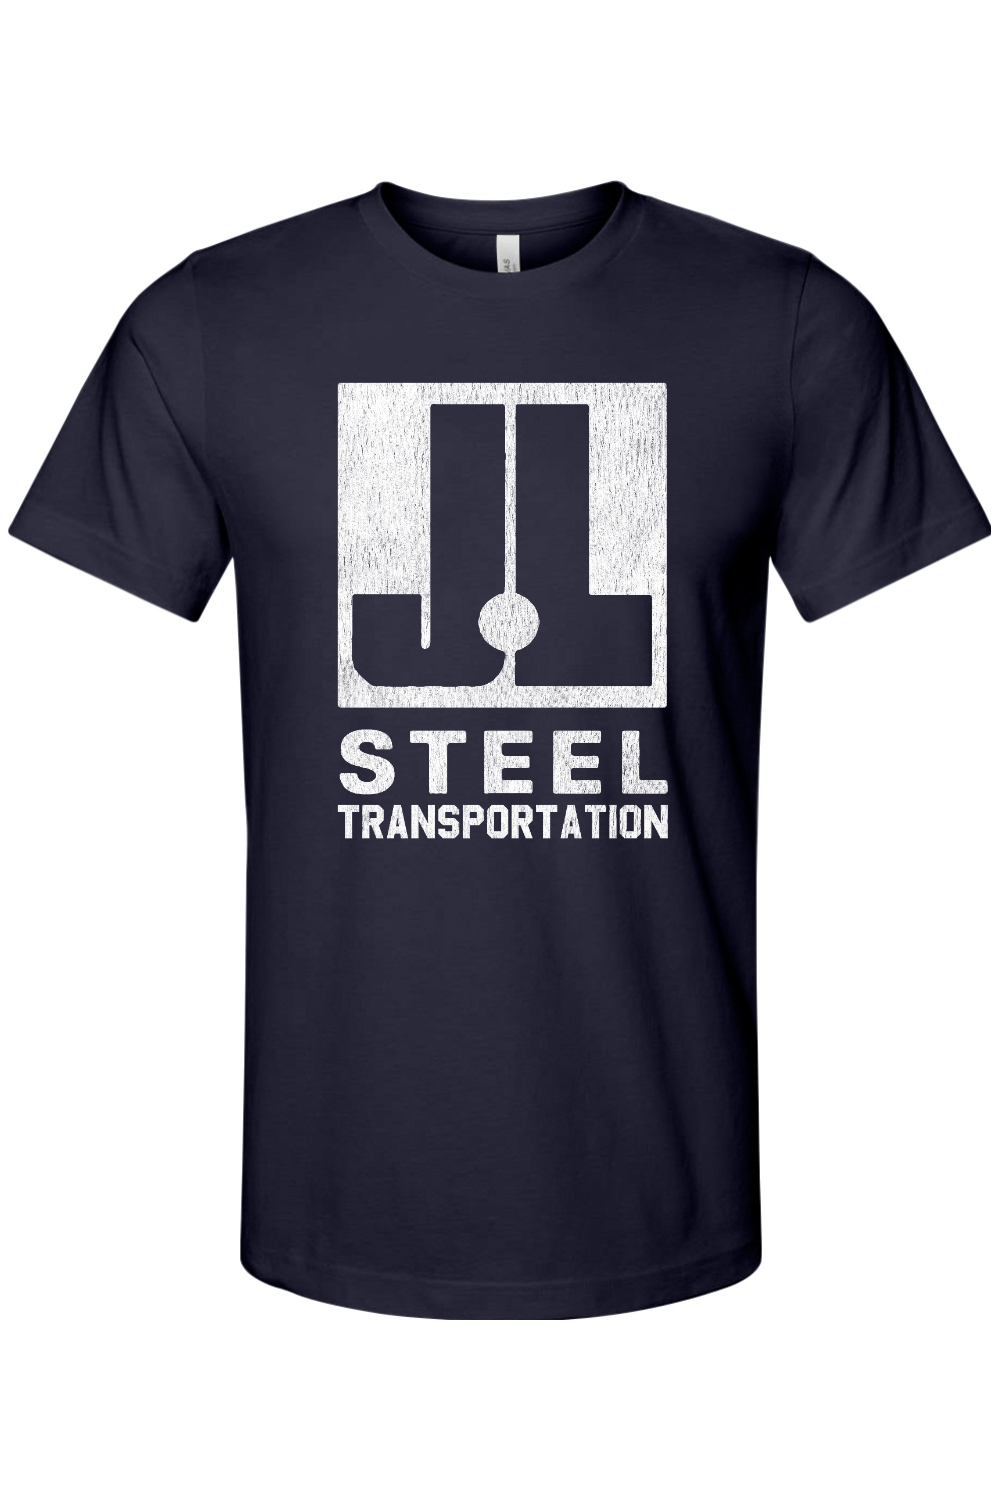 J&L Steel - Transportation - Yinzylvania